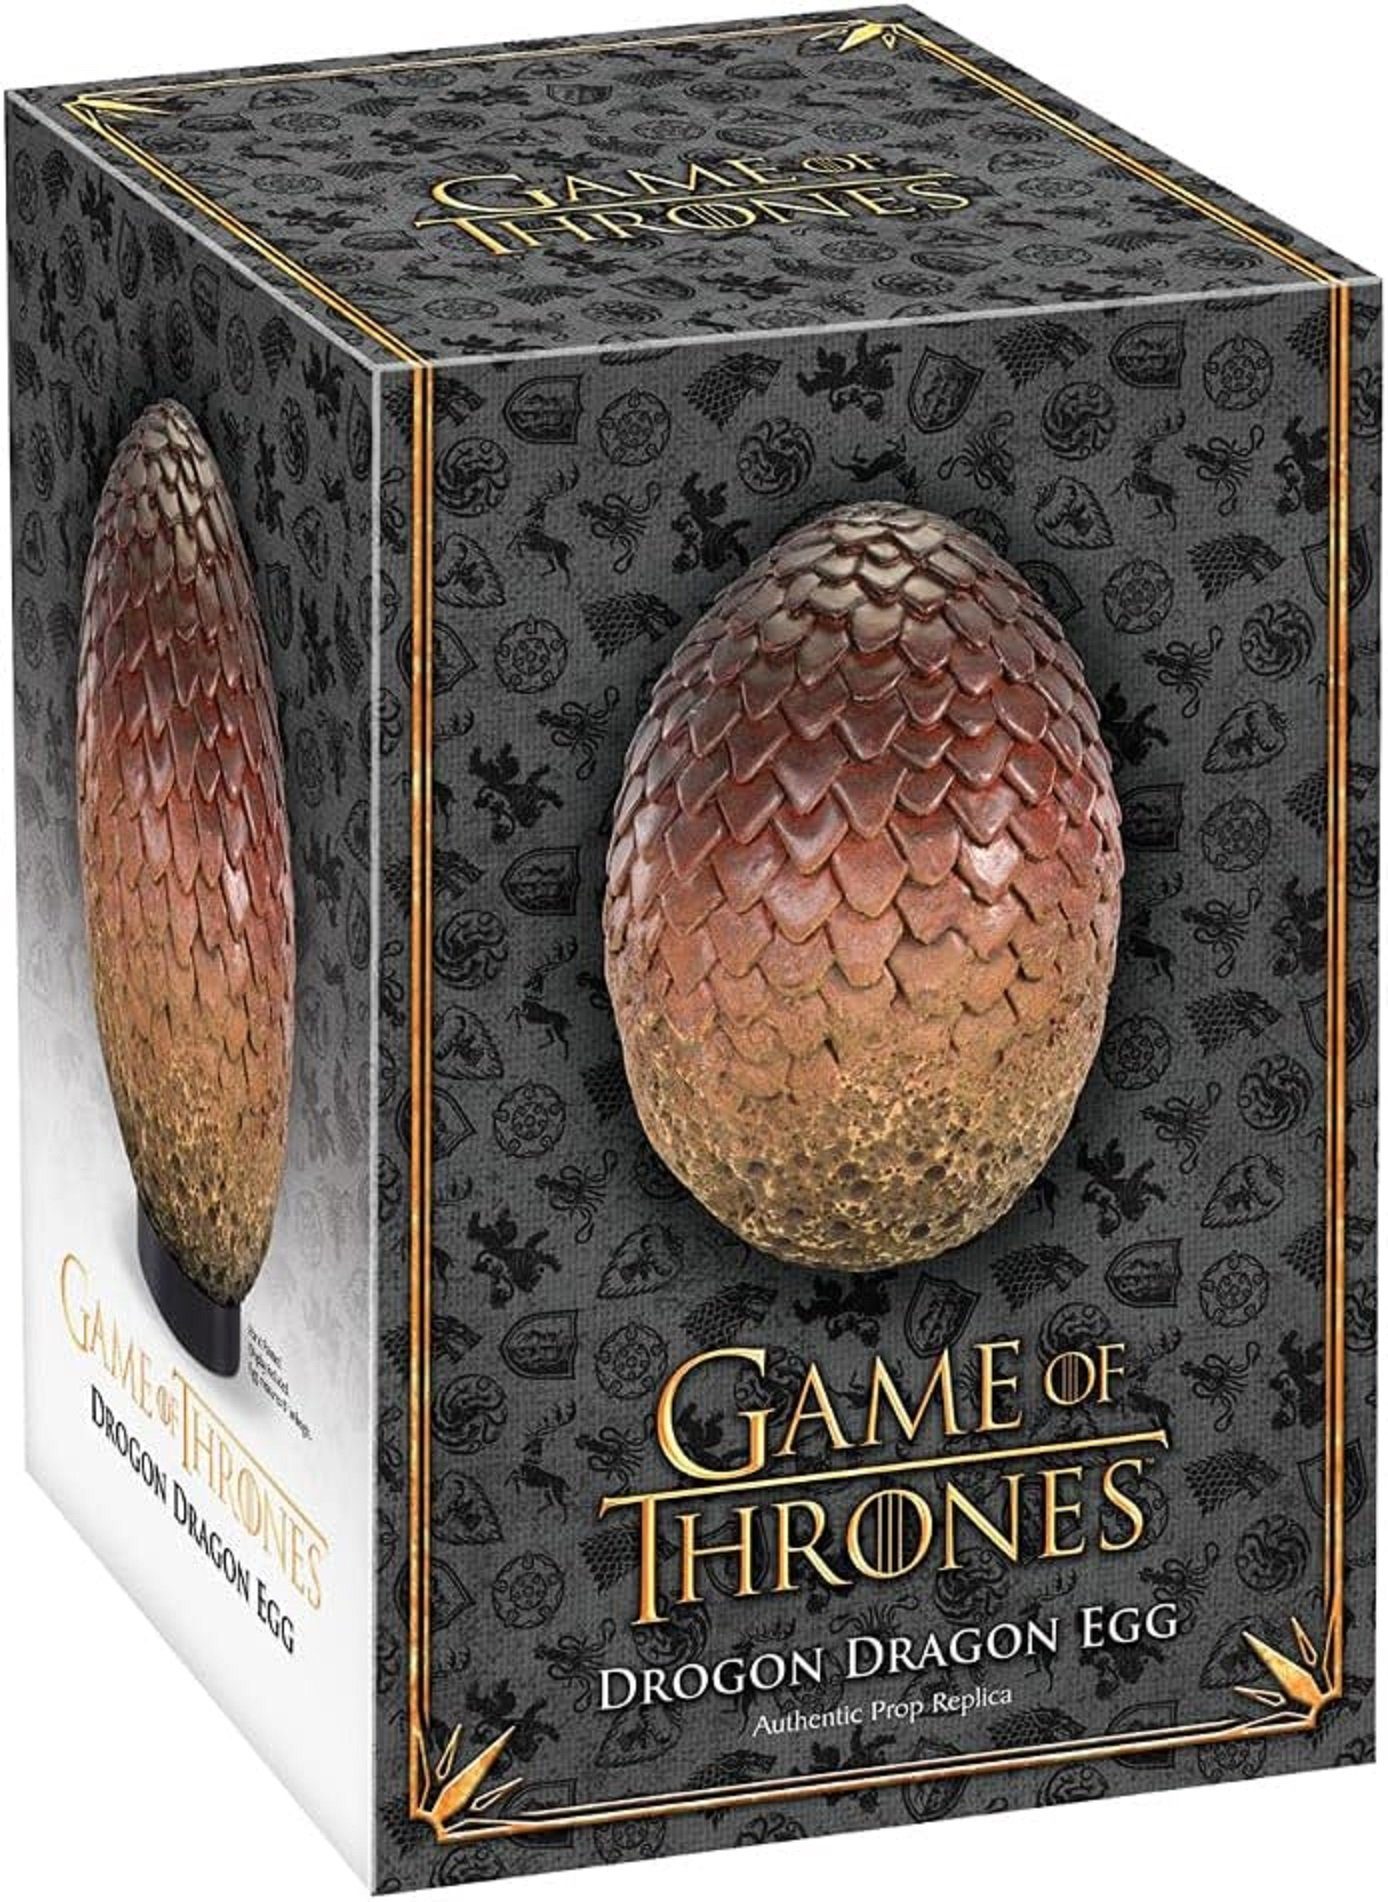 Collection Game of The of Game Produkt Ei Thrones Replik, Noble offiziell Merchandise-Figur Drachen Drogon lizenziertes Thrones